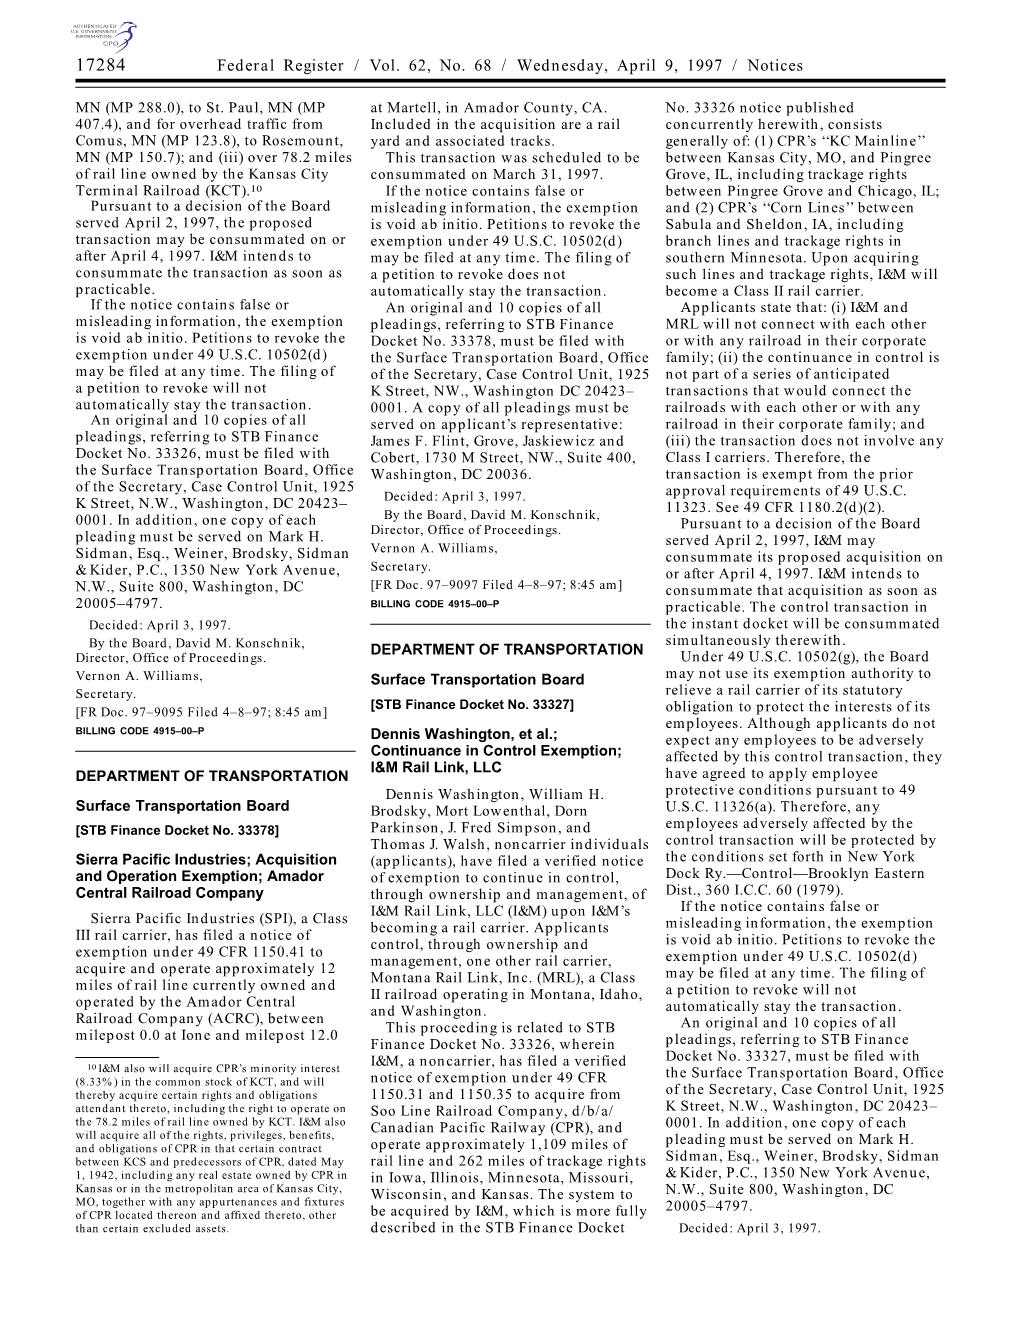 Federal Register / Vol. 62, No. 68 / Wednesday, April 9, 1997 / Notices